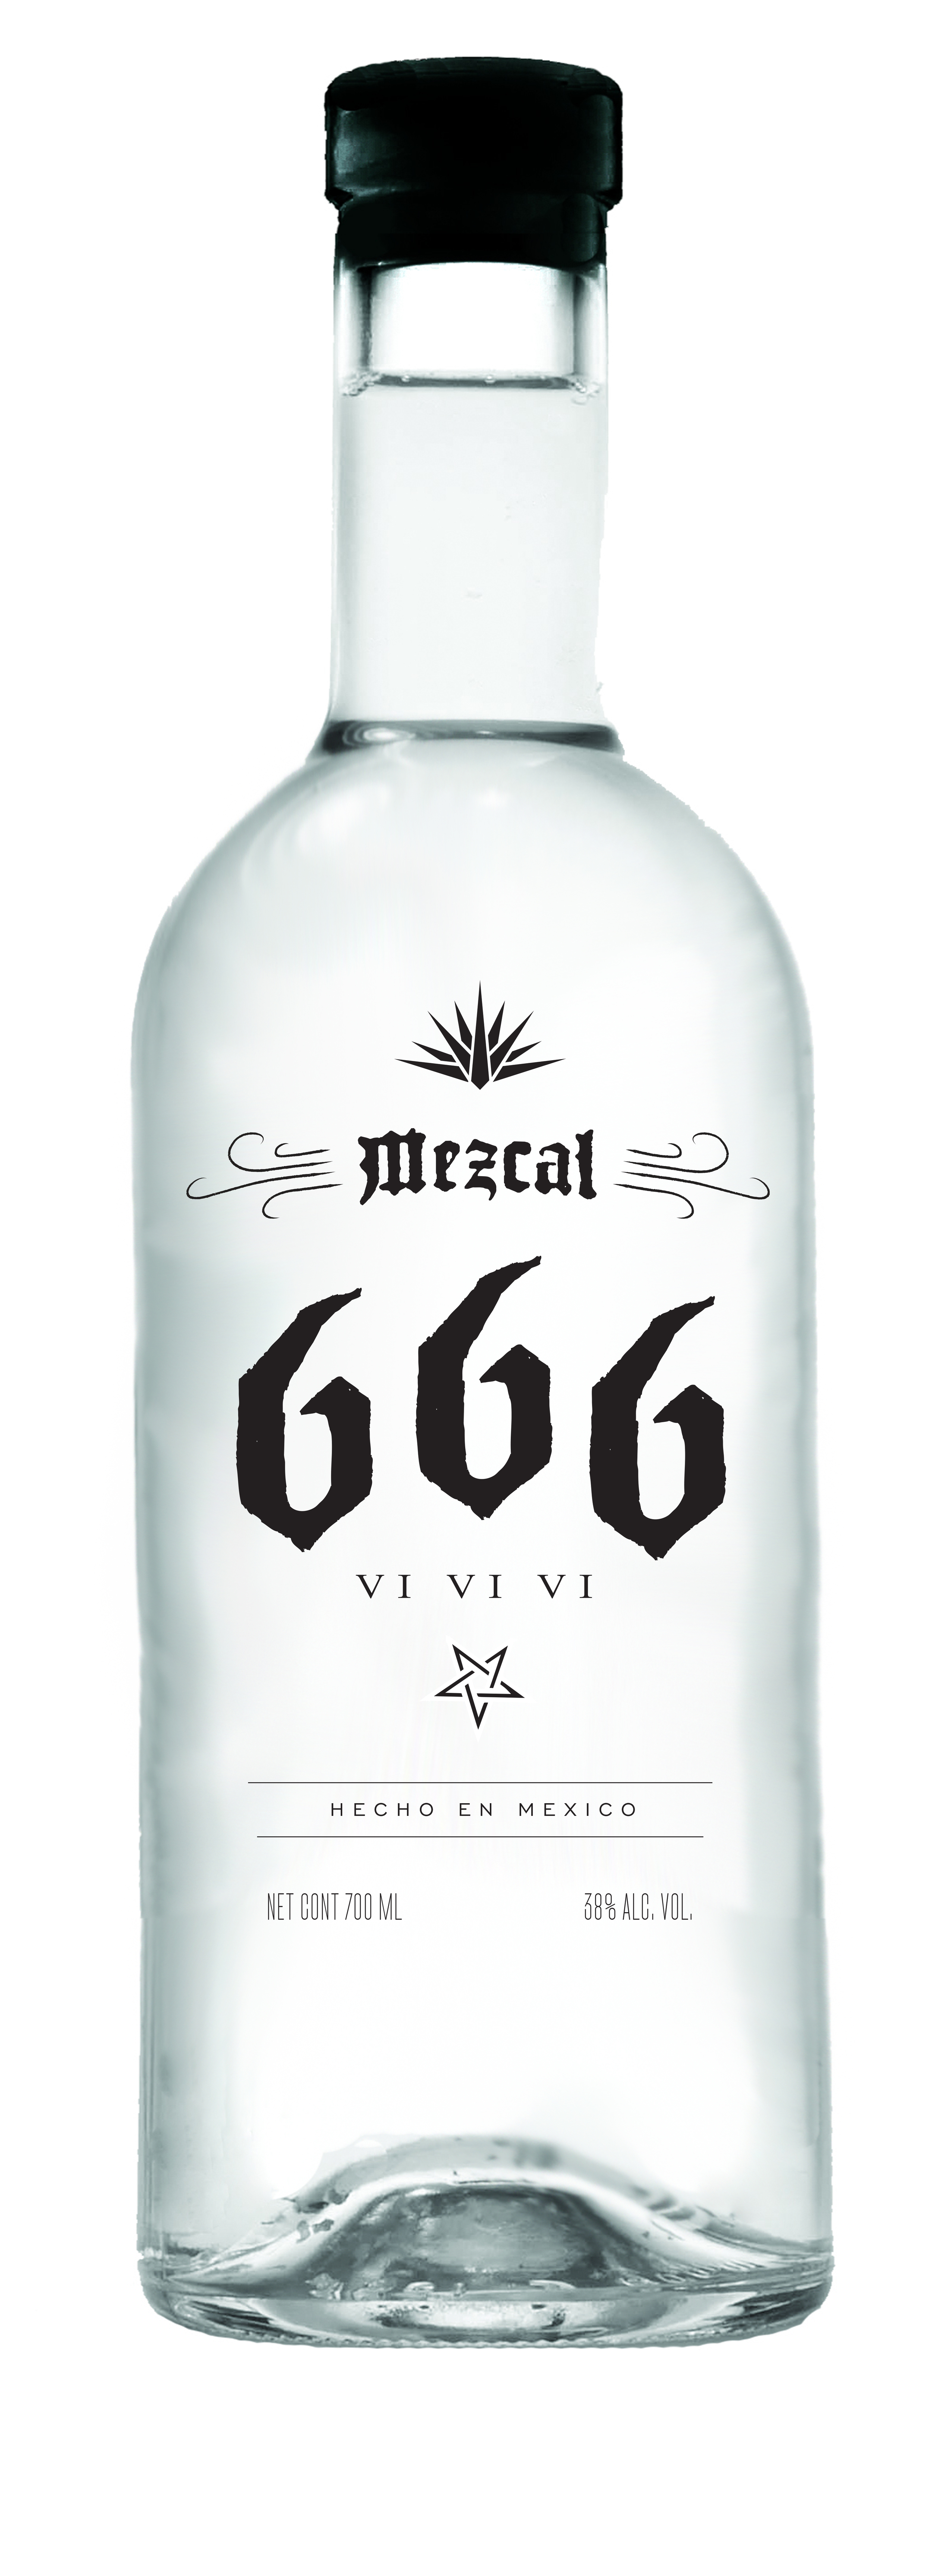 Mezcal 666 Bottles opt2_0012_666 clear short.jpg